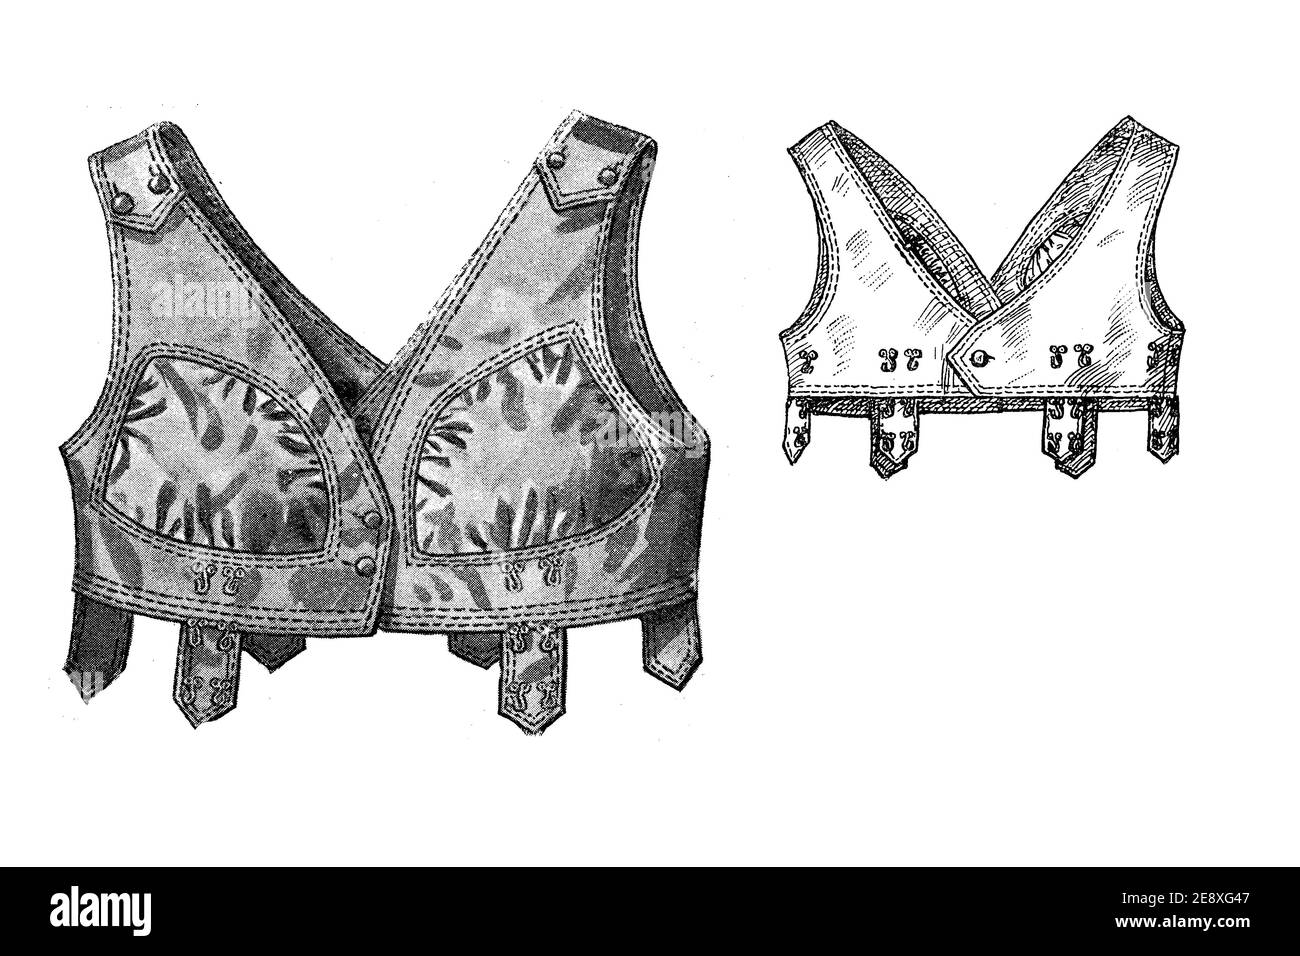 Ladies Fashion 1908,dress reform brassiere: laced corsets were